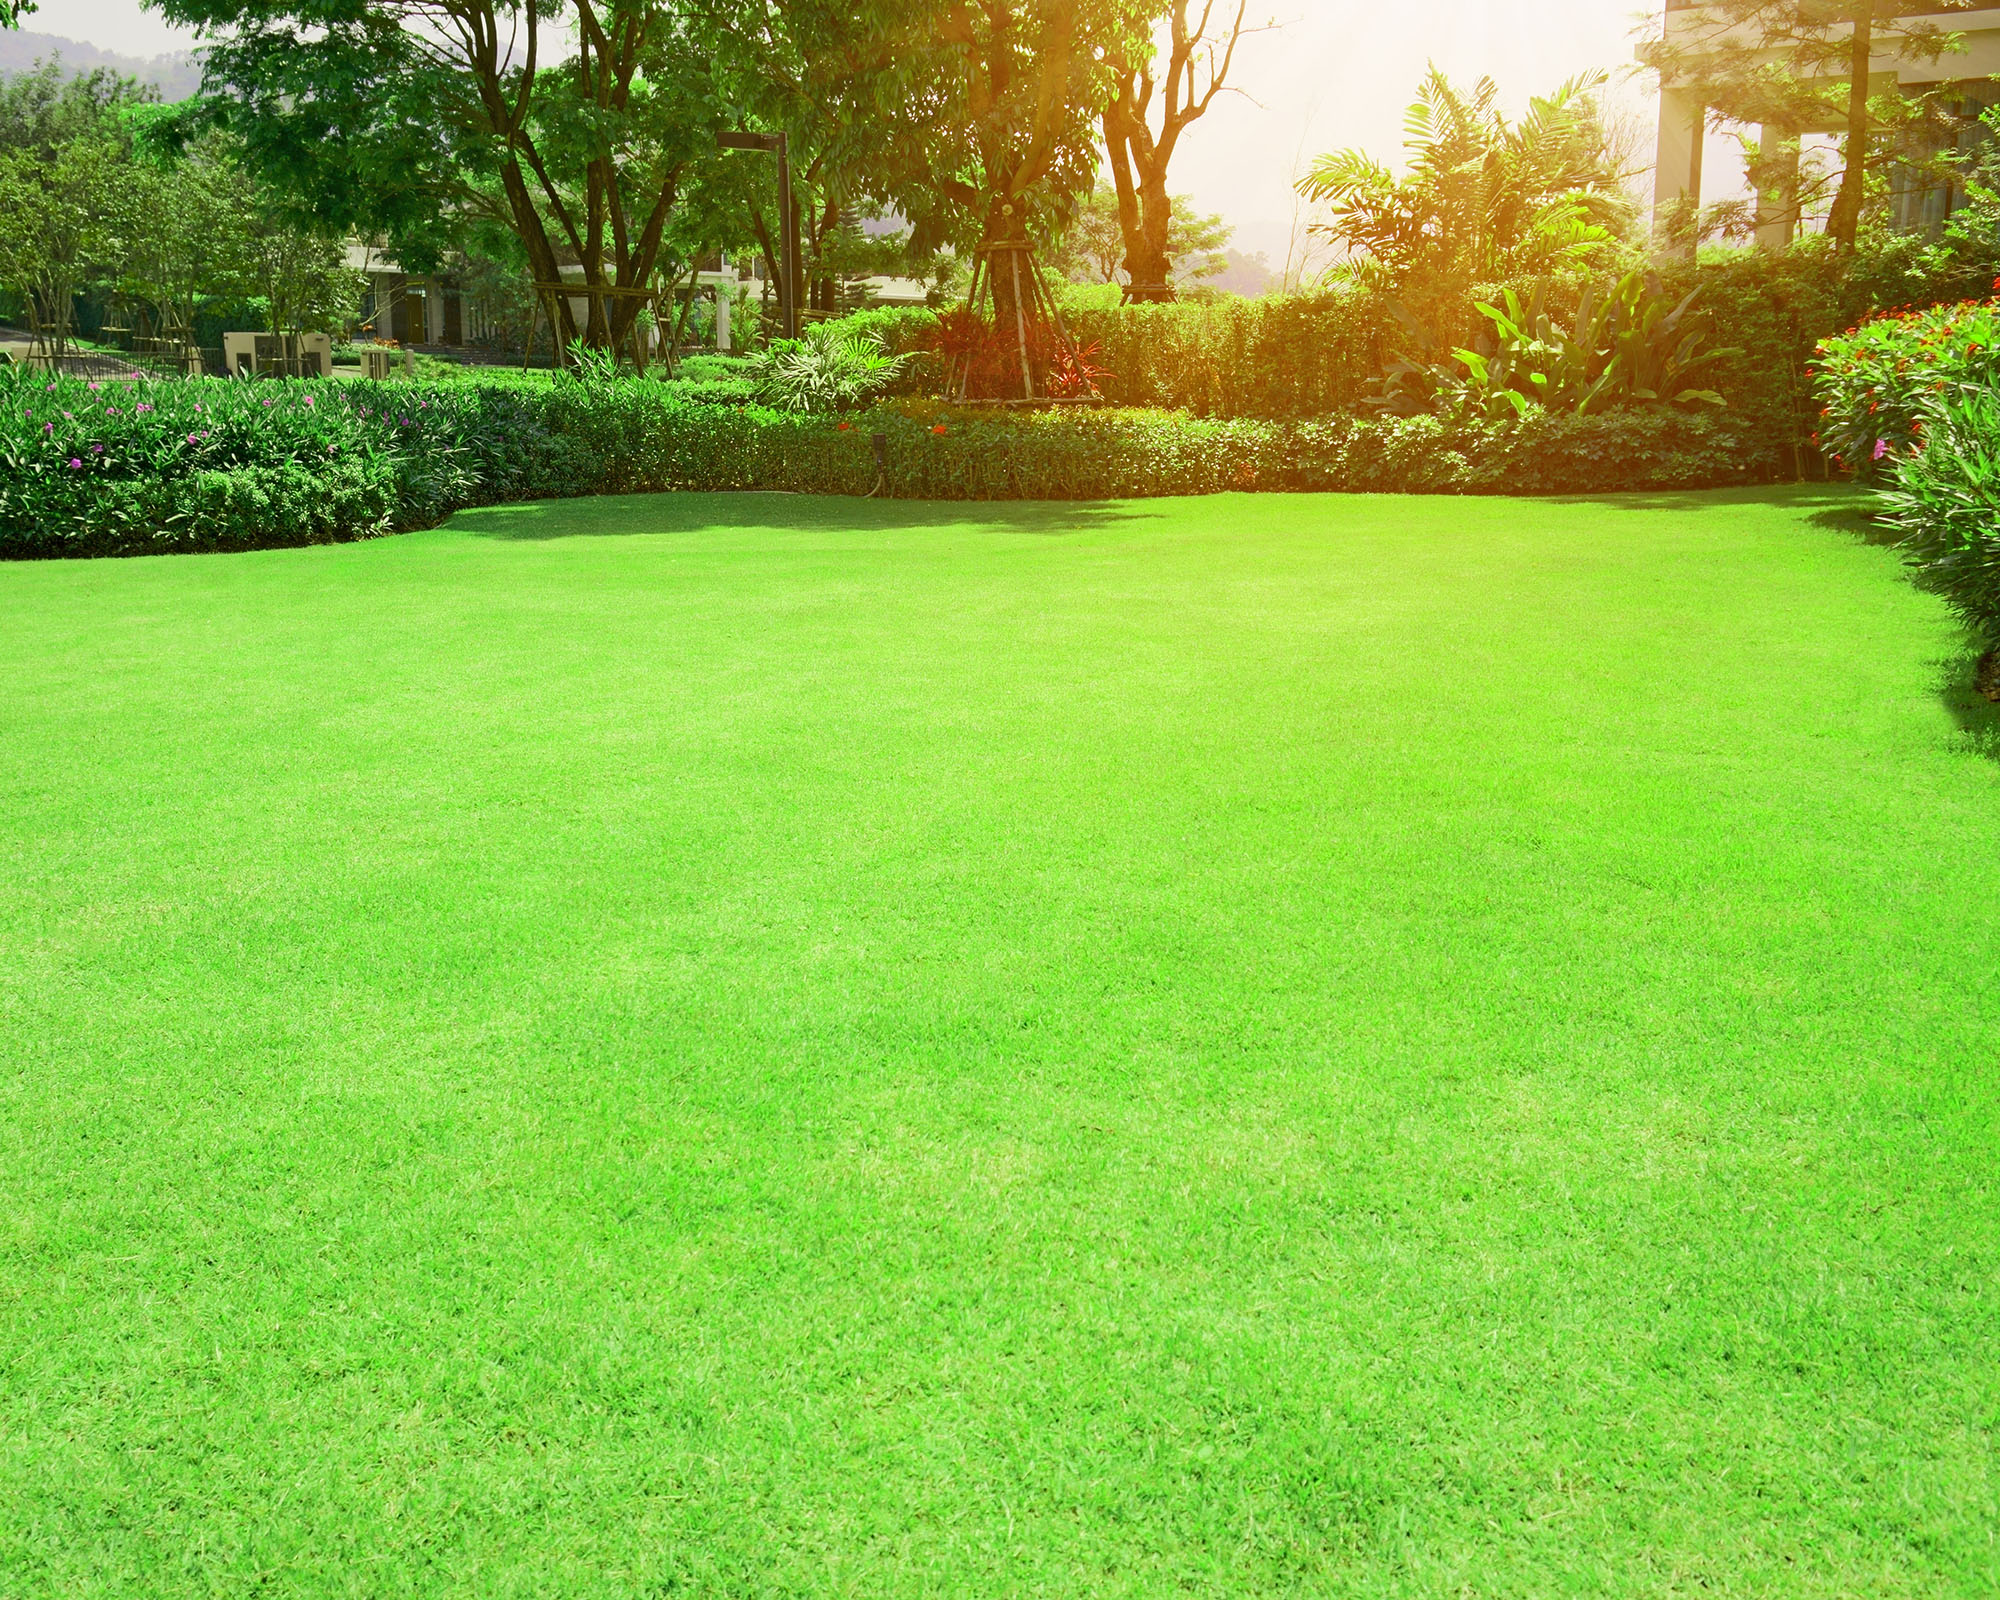 Perfect green lawn of Bermuda grass